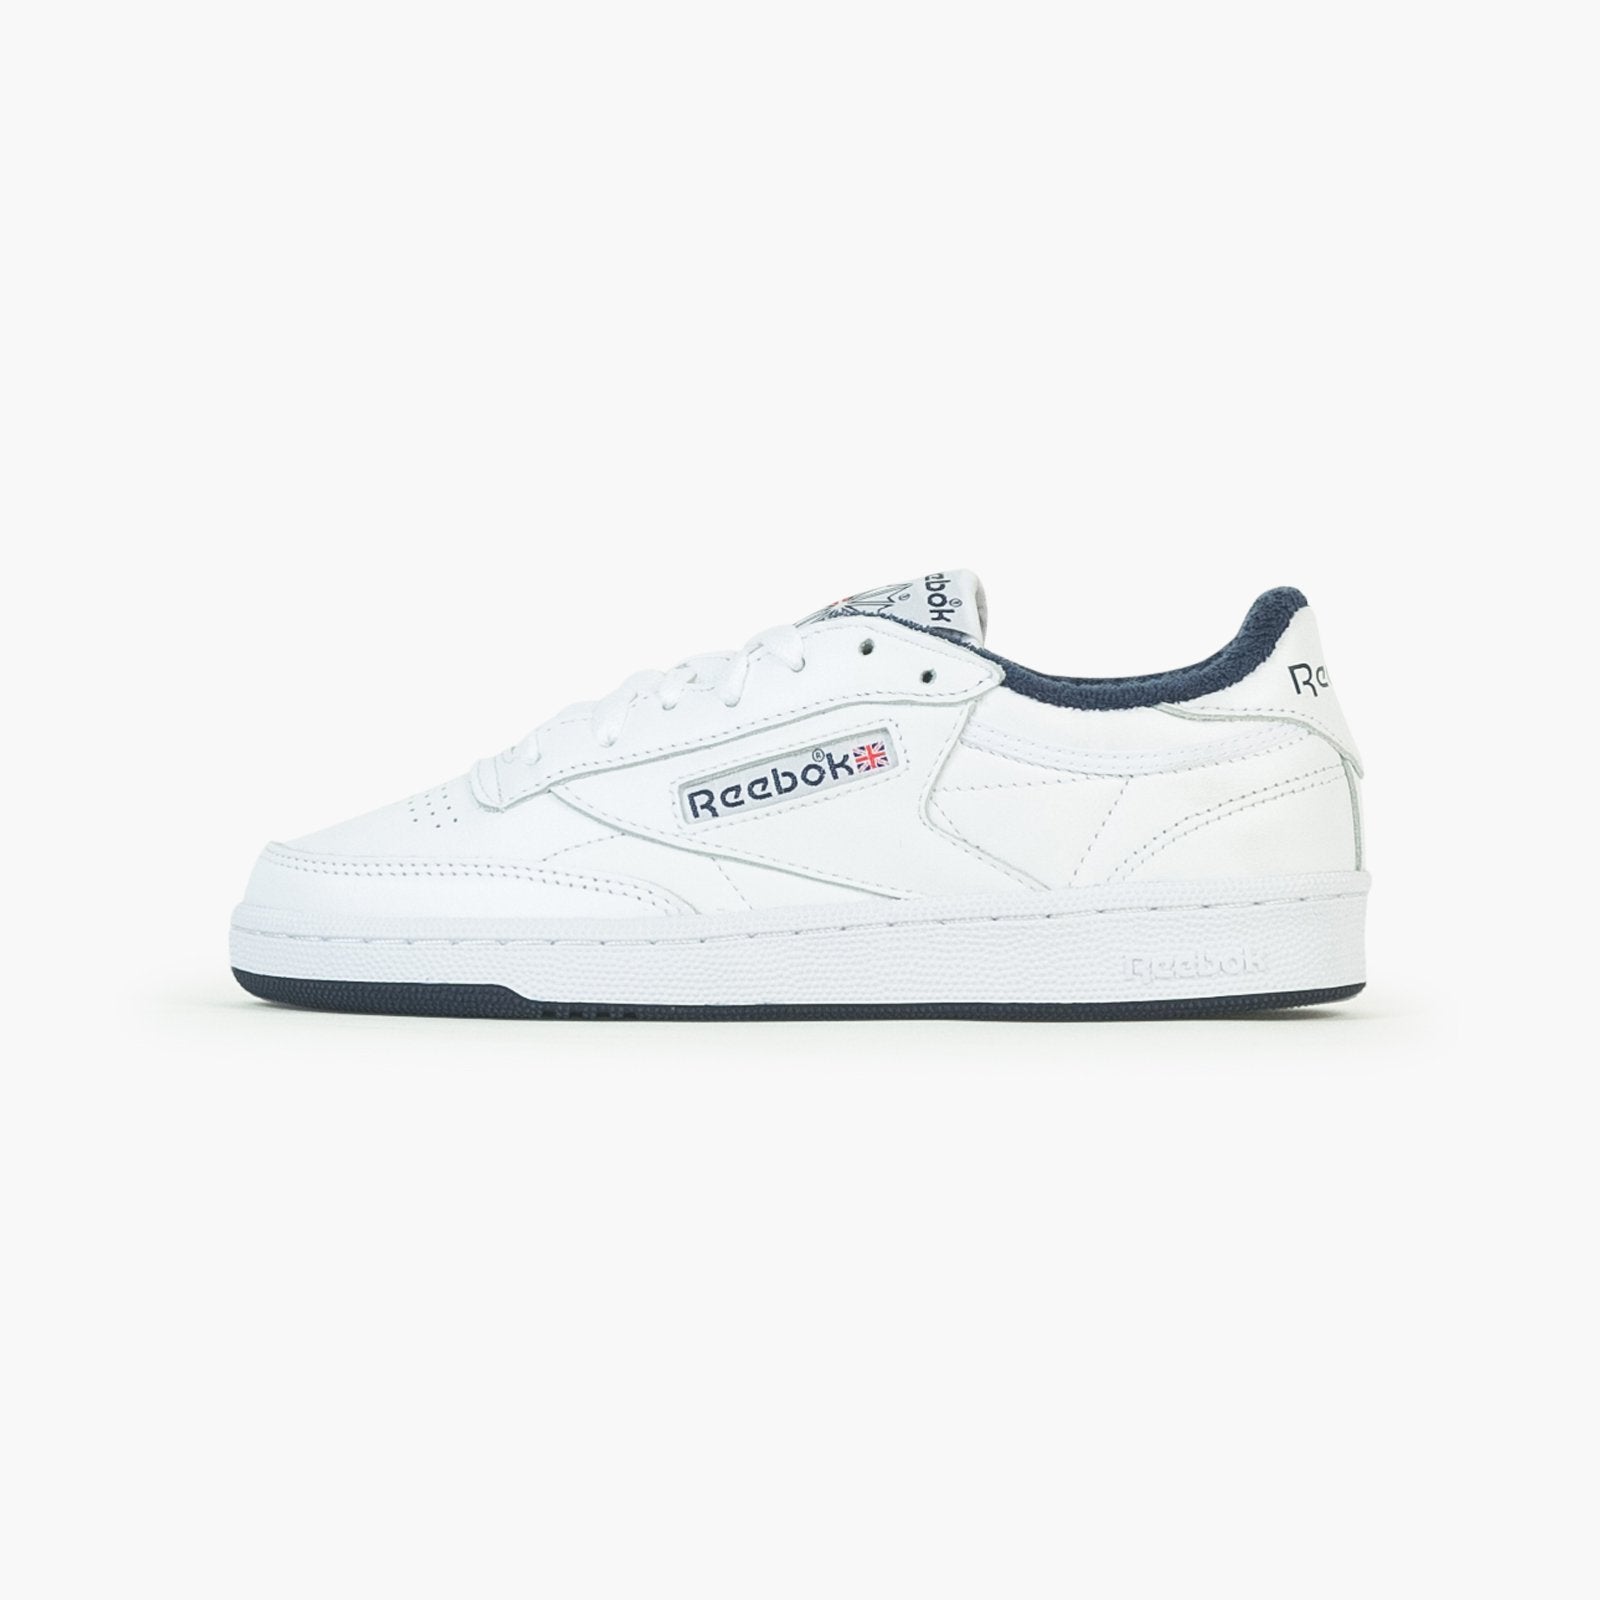 Club C 85 Shoes - White / Navy